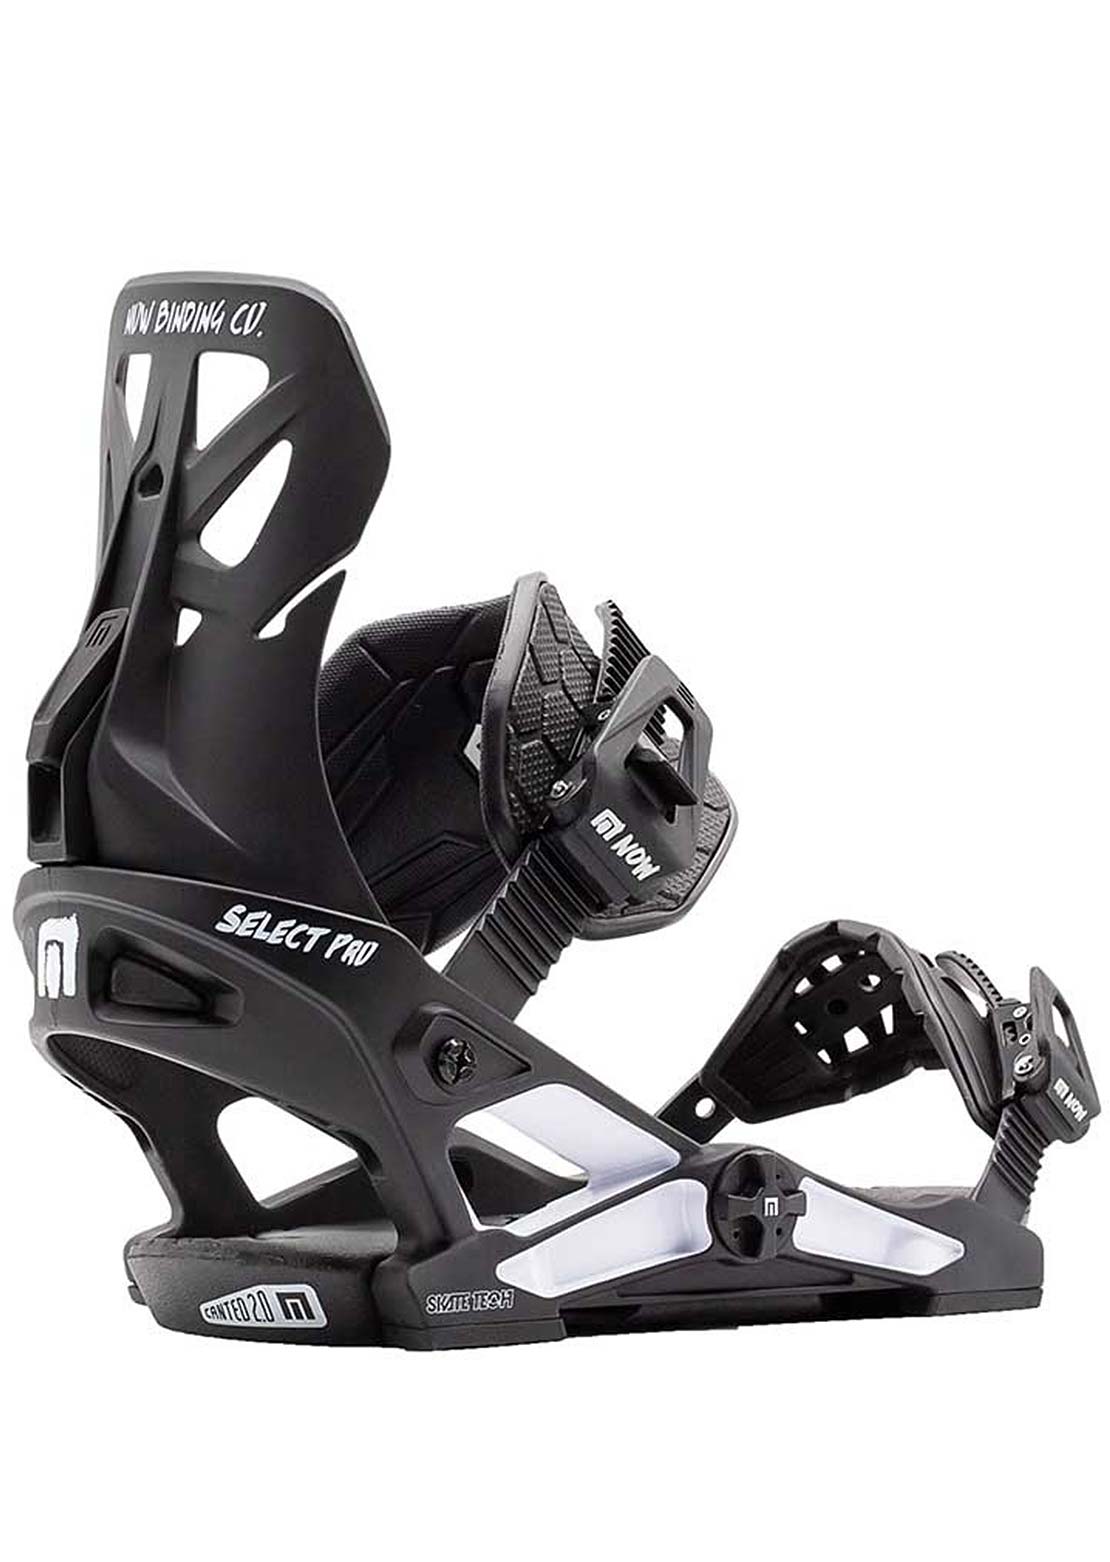 NOW Select Pro Snowboard Binding Black